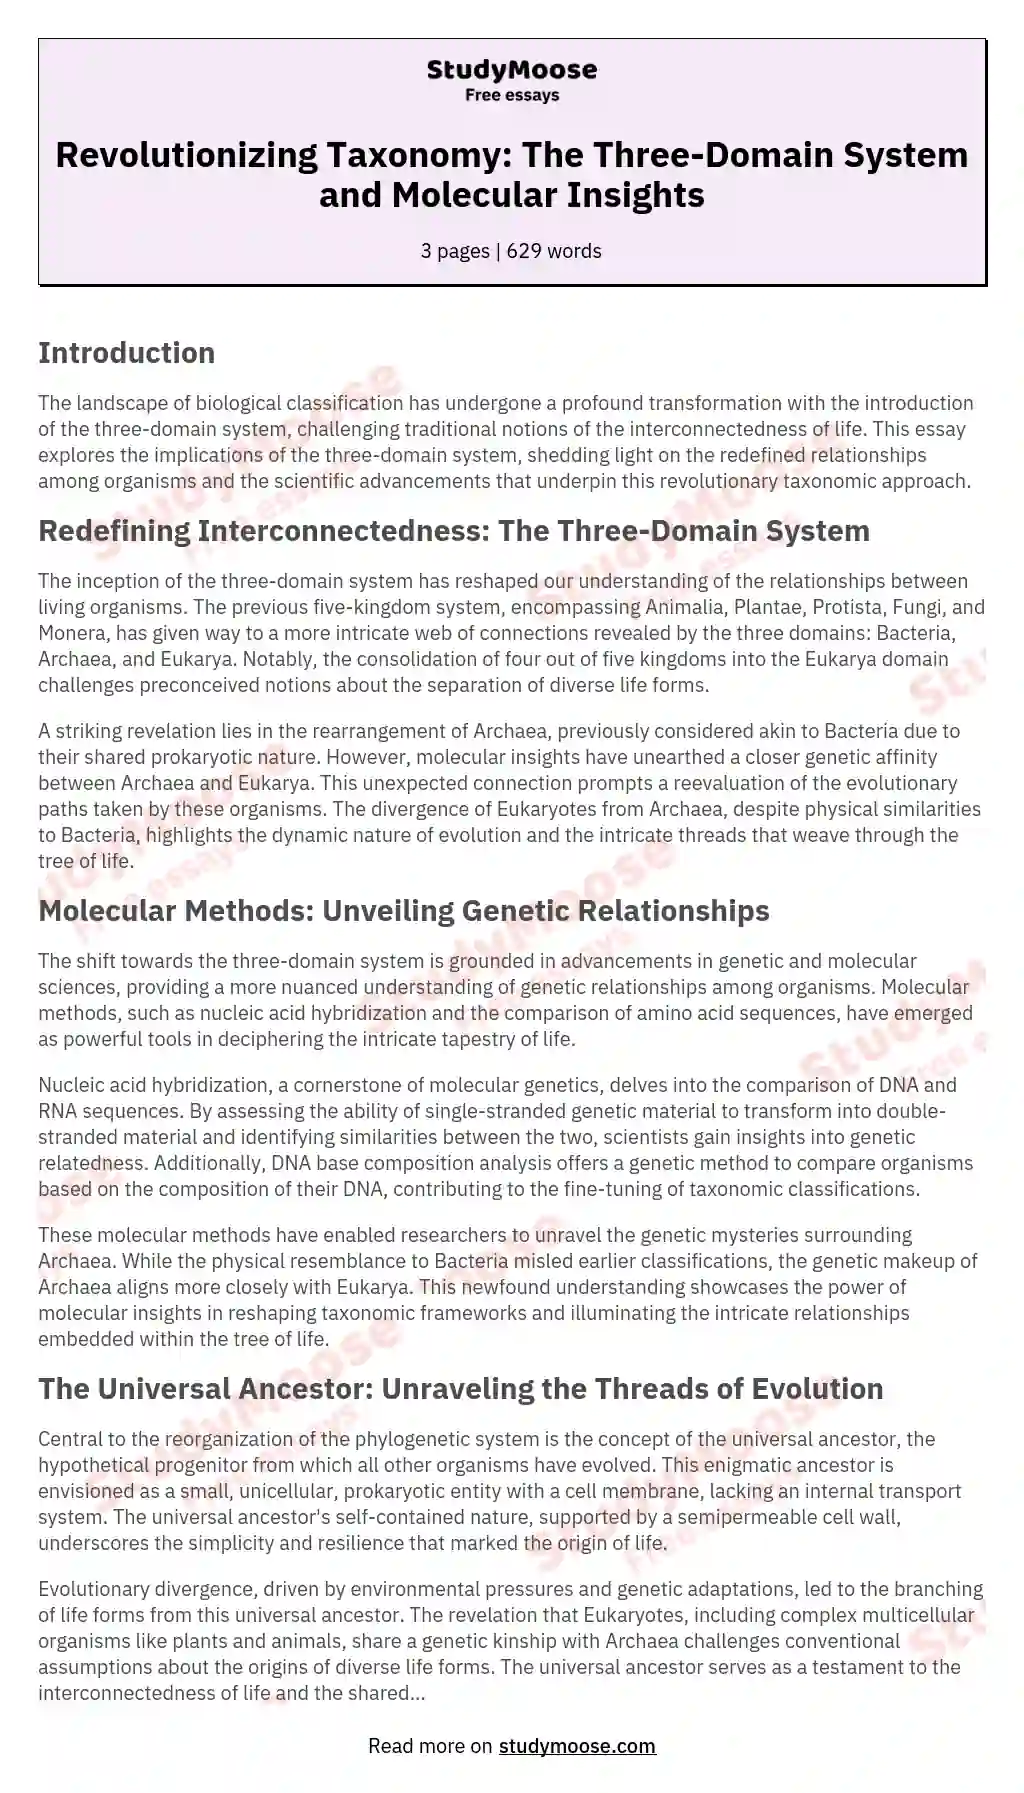 Revolutionizing Taxonomy: The Three-Domain System and Molecular Insights essay